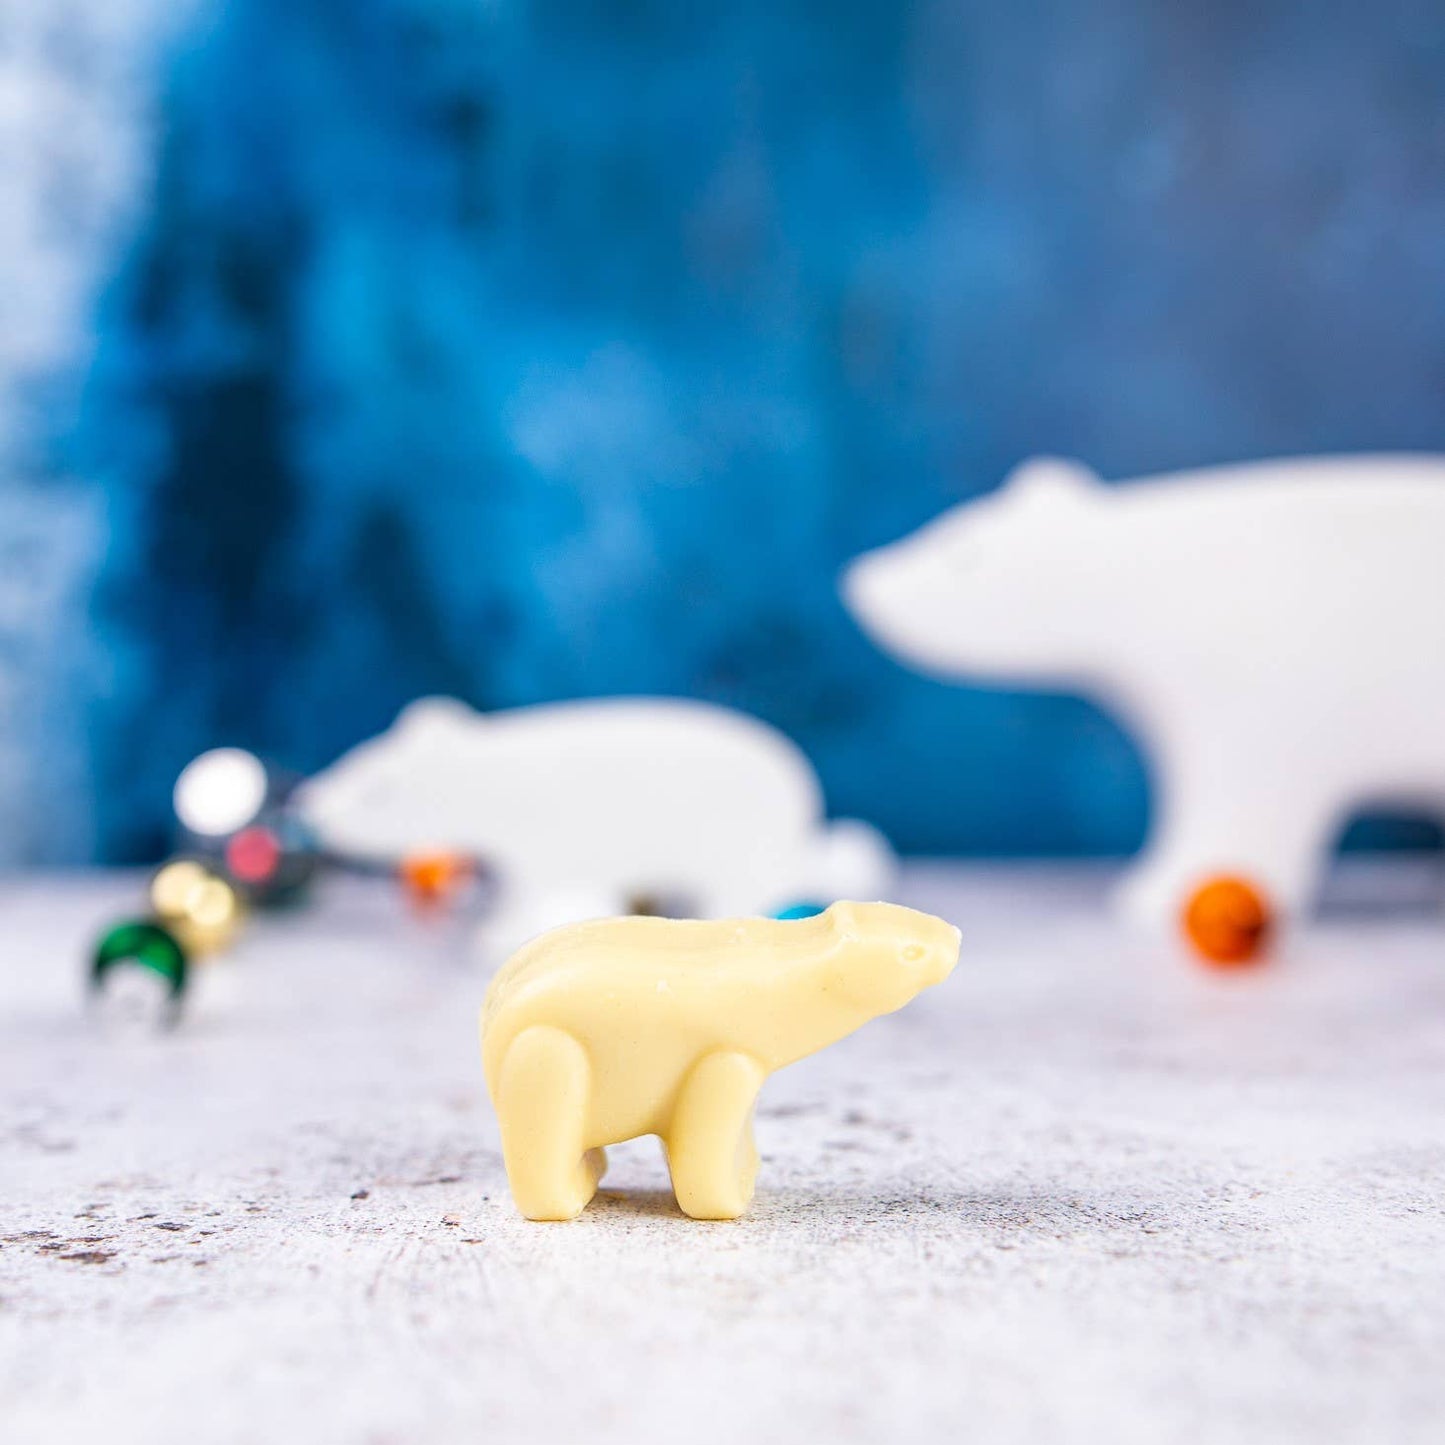 White Chocolate Polar Bears – 100g